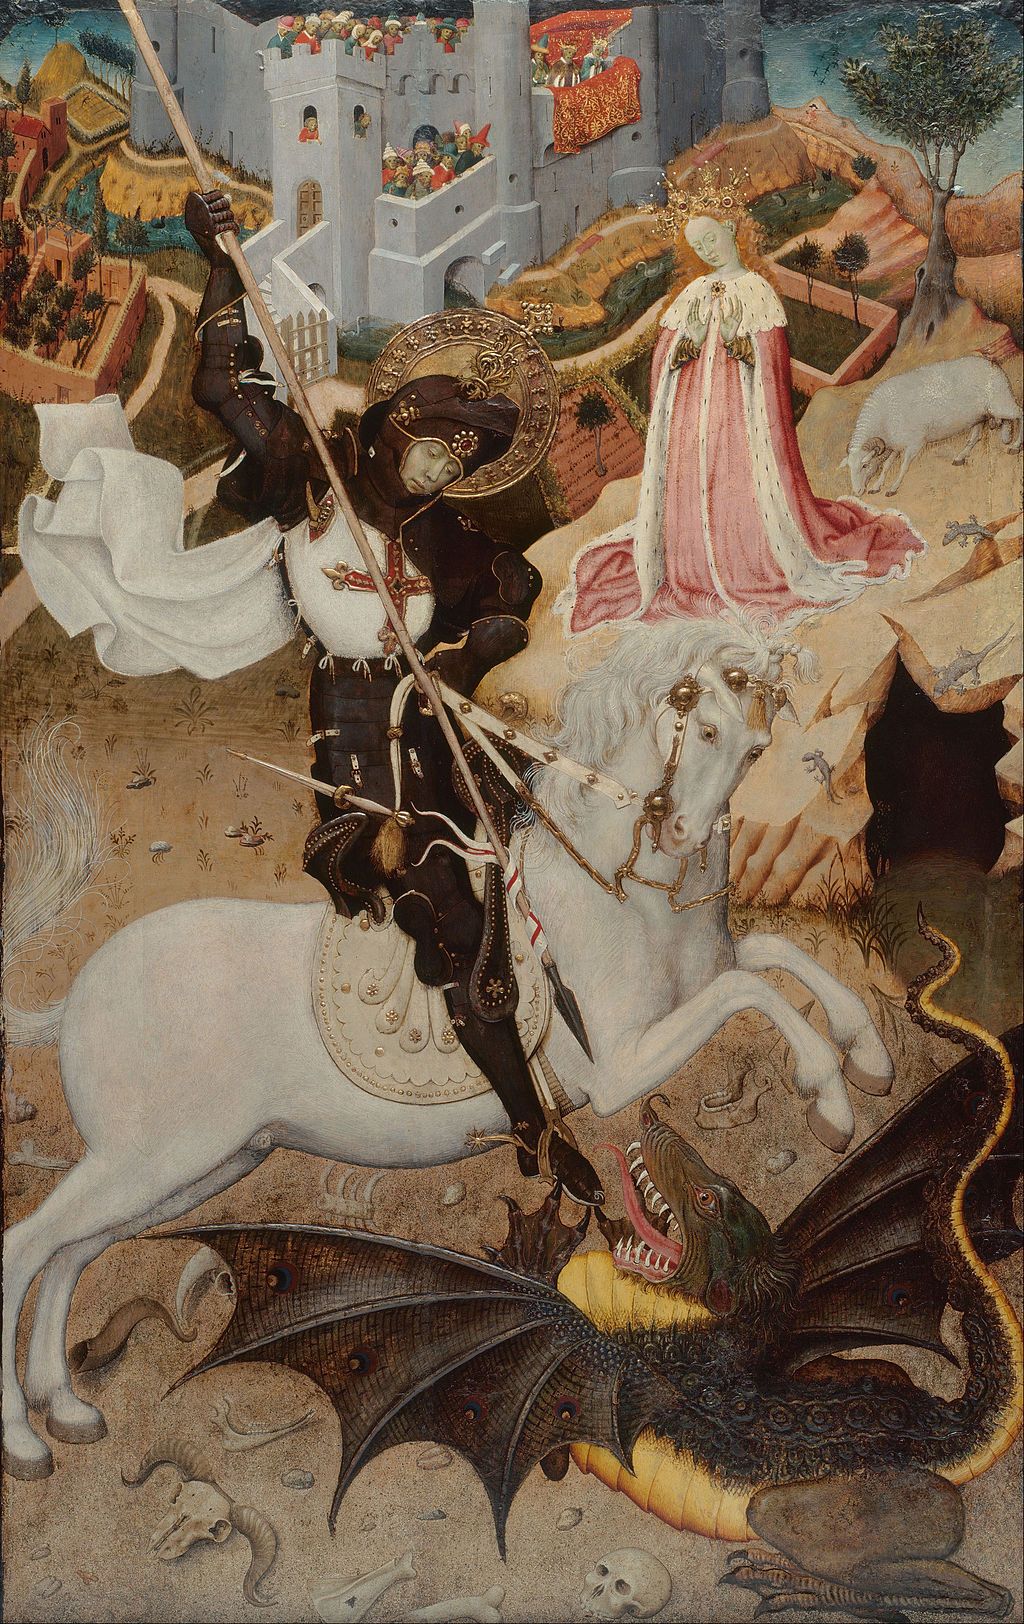 Bernat Martorell, Saint George Killing the Dragon, 1435